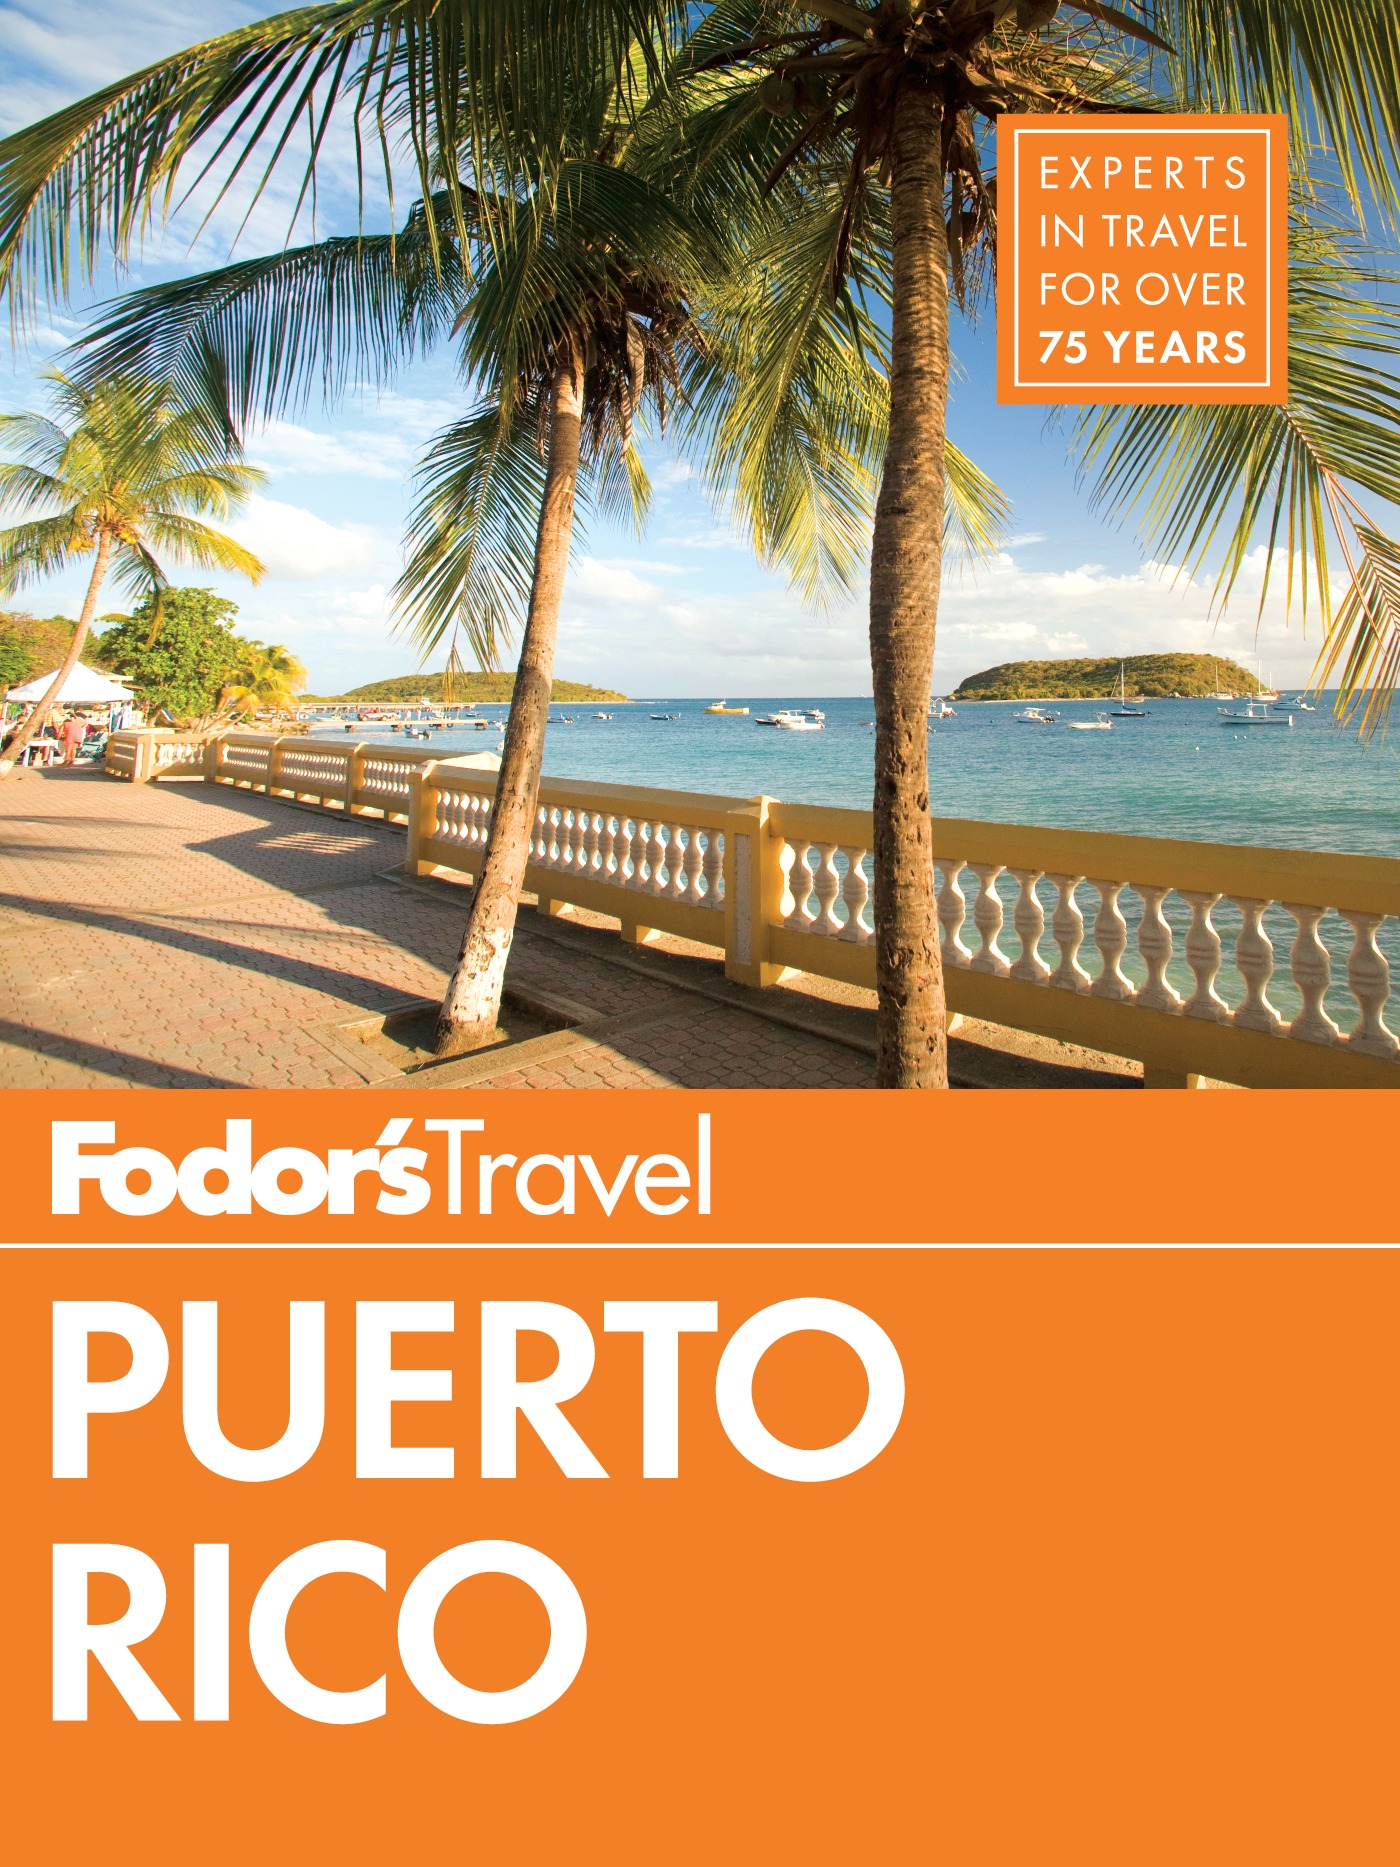 Fodor's Puerto Rico cover image